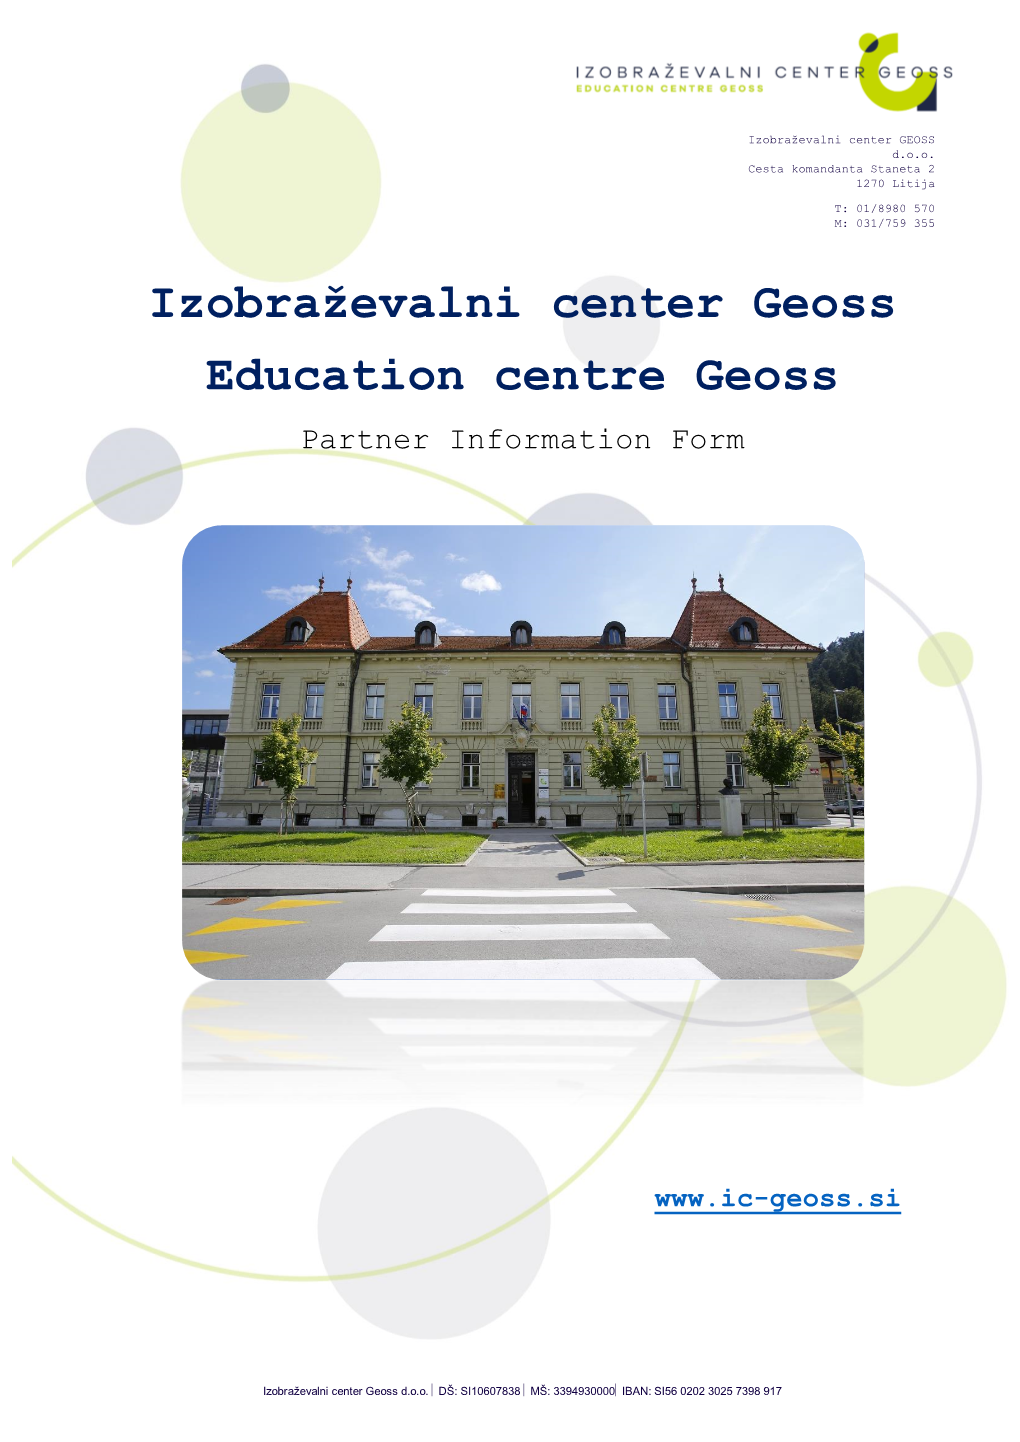 Izobraževalni Center Geoss Education Centre Geoss Partner Information Form